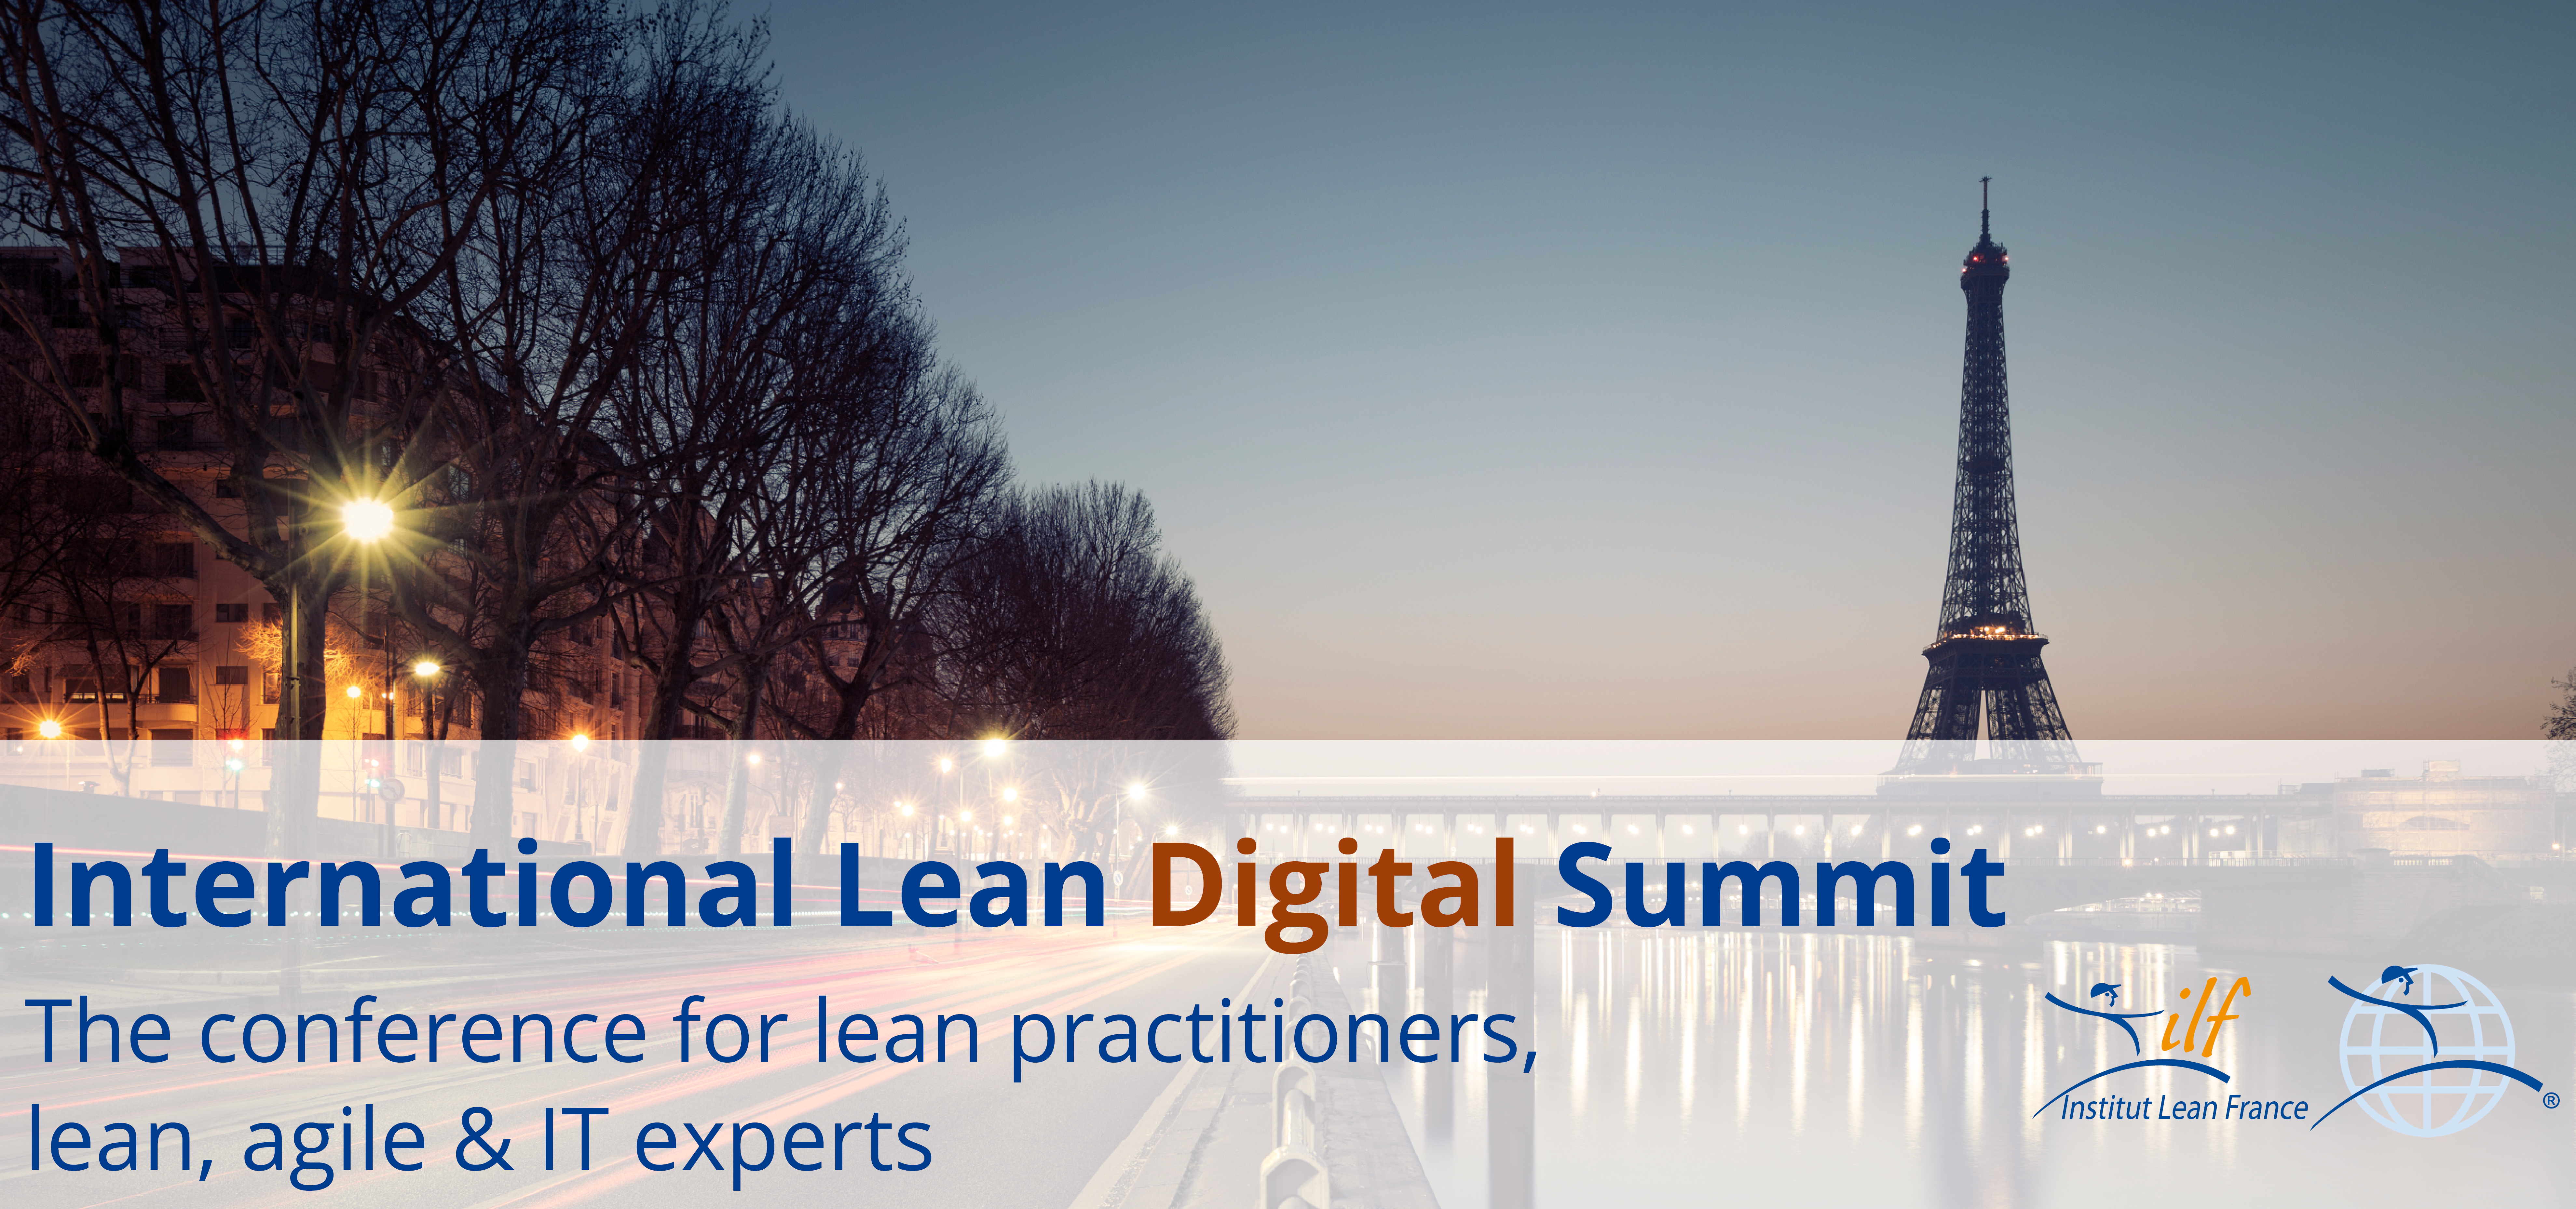 Lean Digital Summit 2019